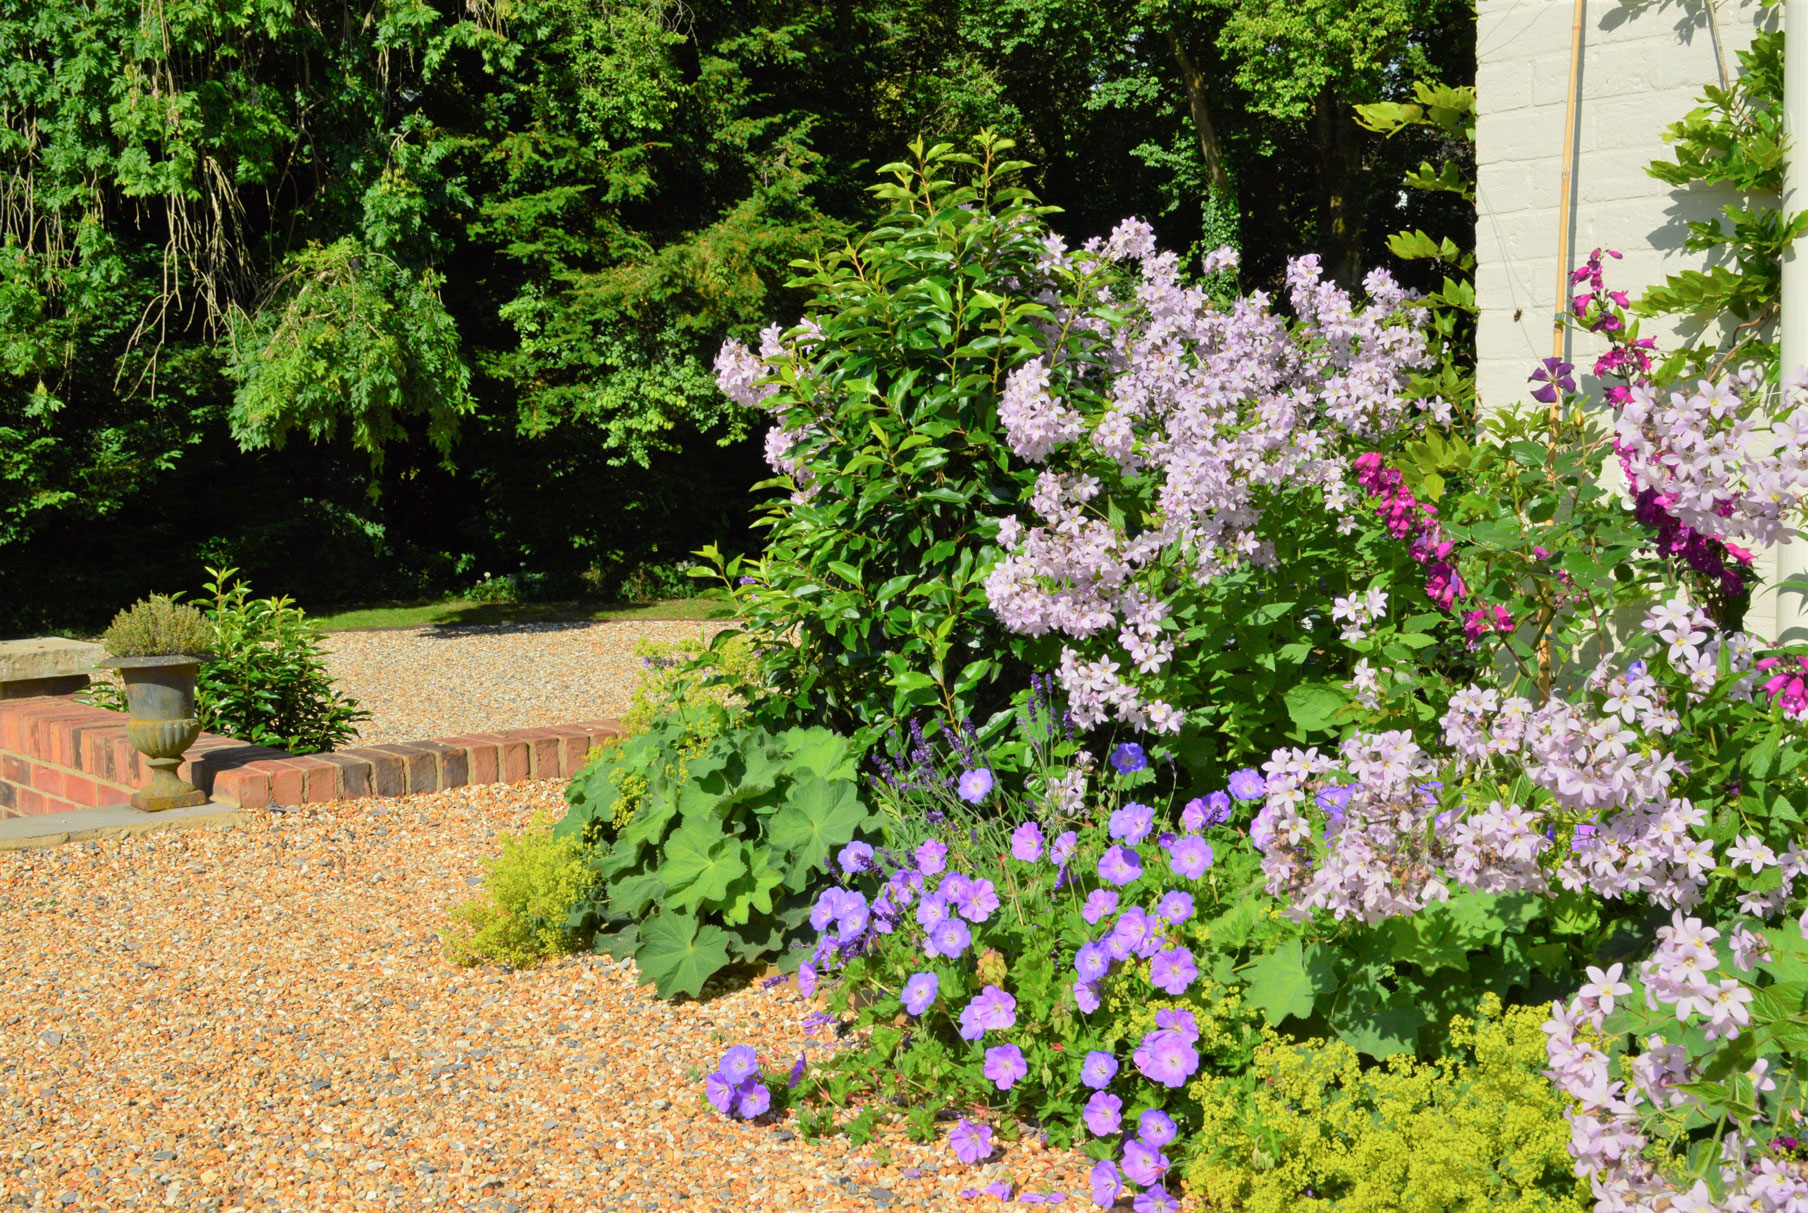 Campanula 'Loddon Anna' with Geranium 'Rozanne' garden design